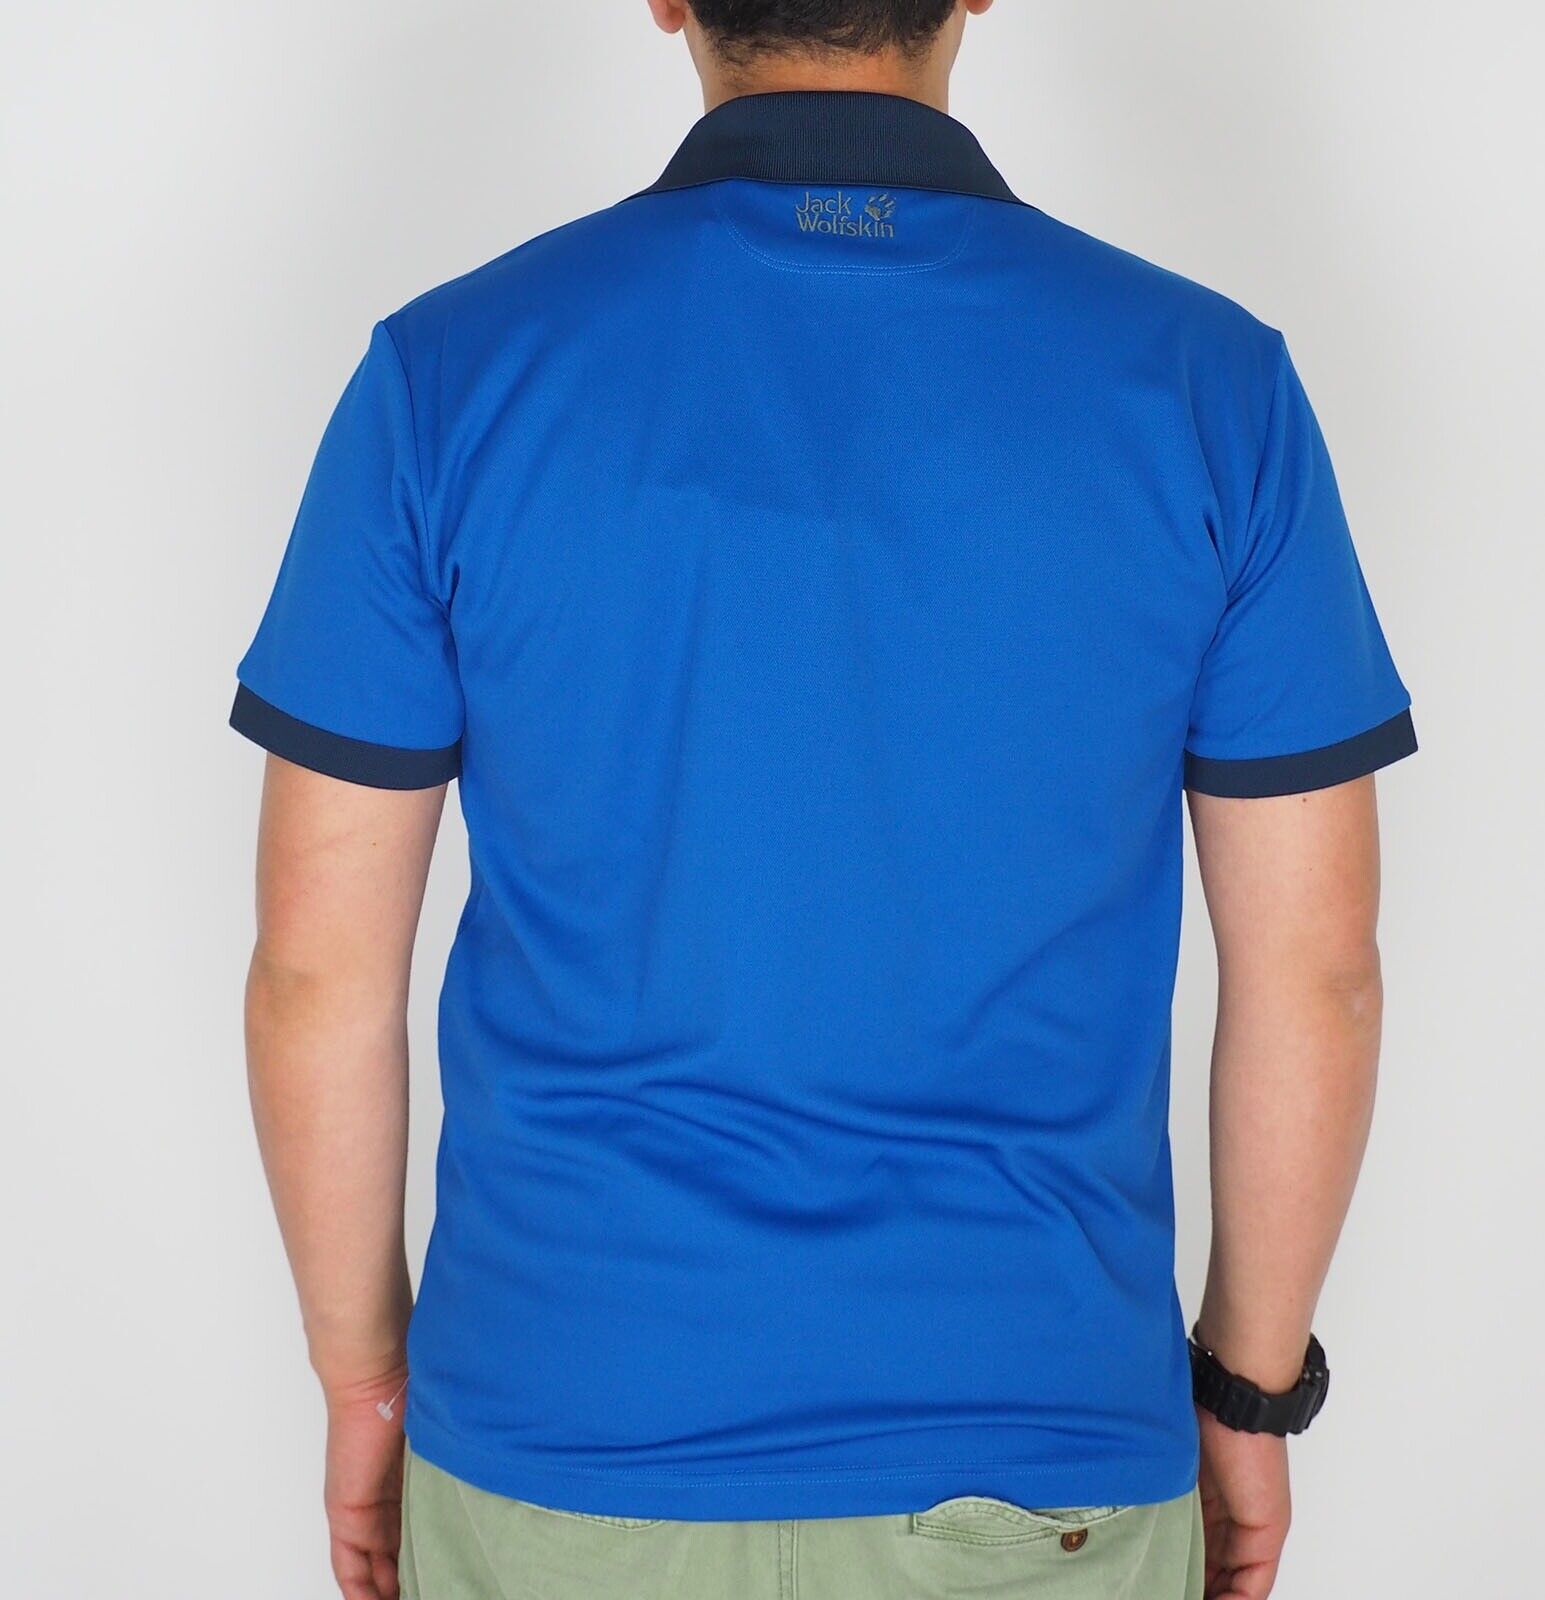 Mens Jack Wolfskin SU15 5006231 Classic Blue Short Sleeve Summer Polo Shirt - London Top Style